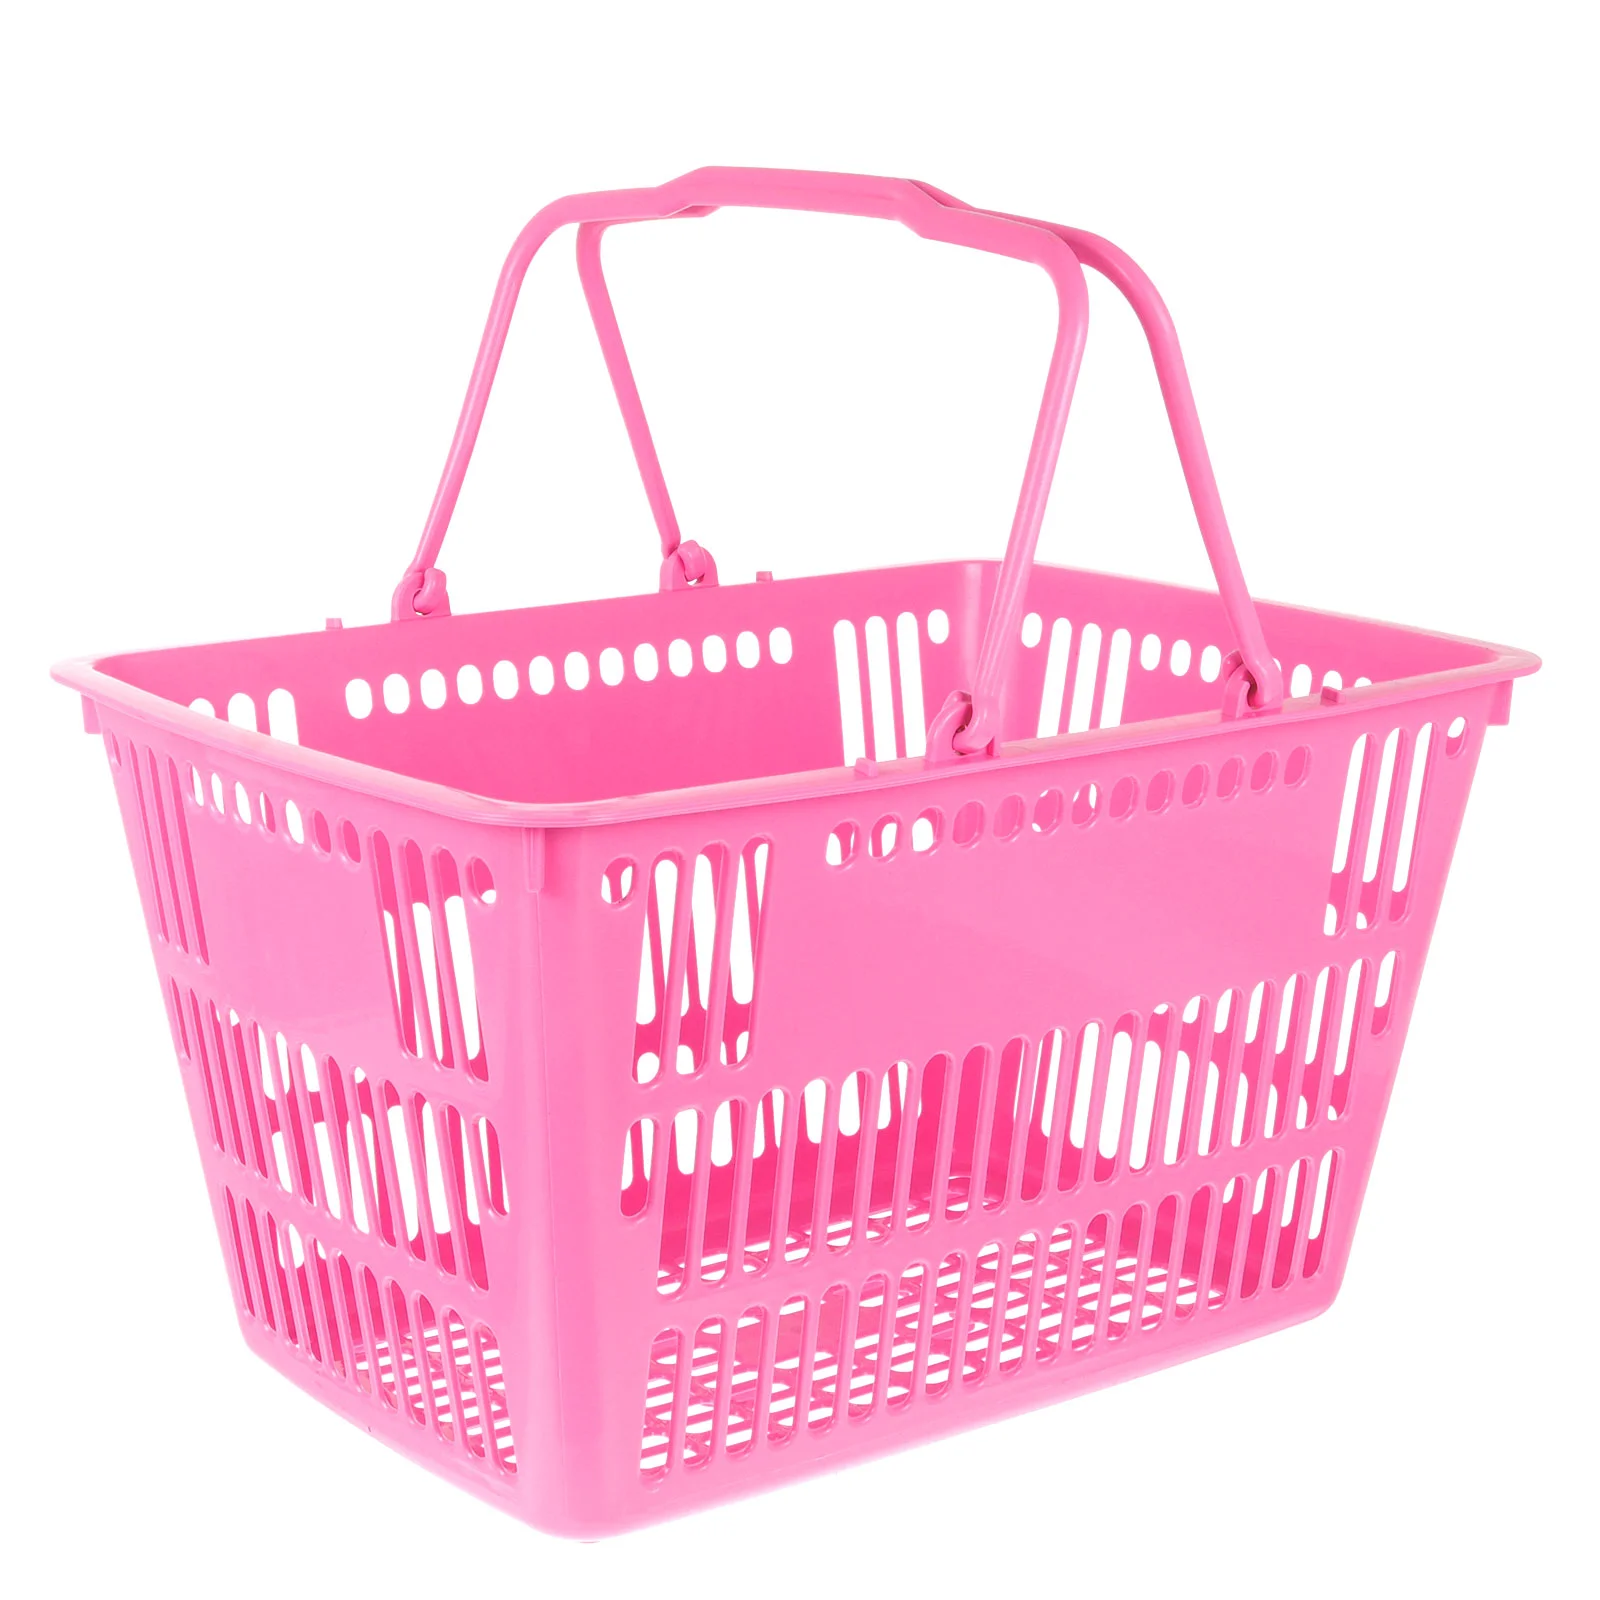 

Mini Foods Grocery Basket Shopping Baskets Retail Store Picnic Basket Shopping Basket Plastic Vegetable Basket Organizing Basket